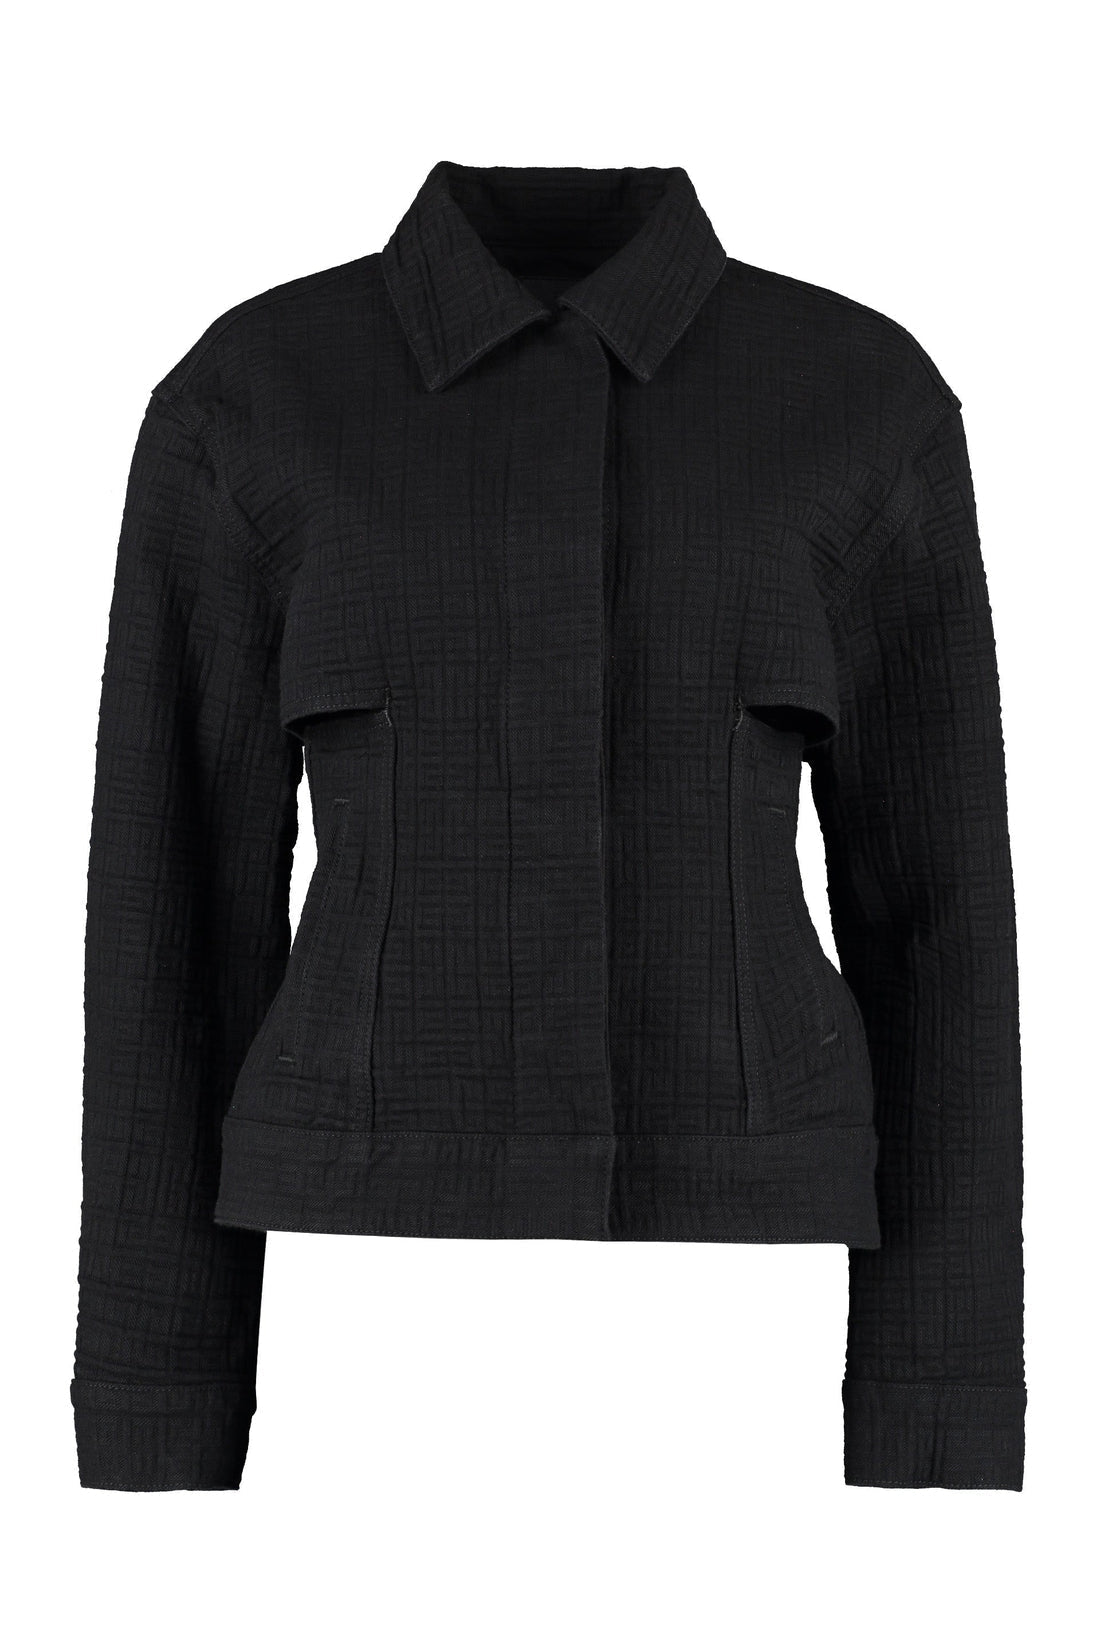 Givenchy-OUTLET-SALE-Denim jacket-ARCHIVIST